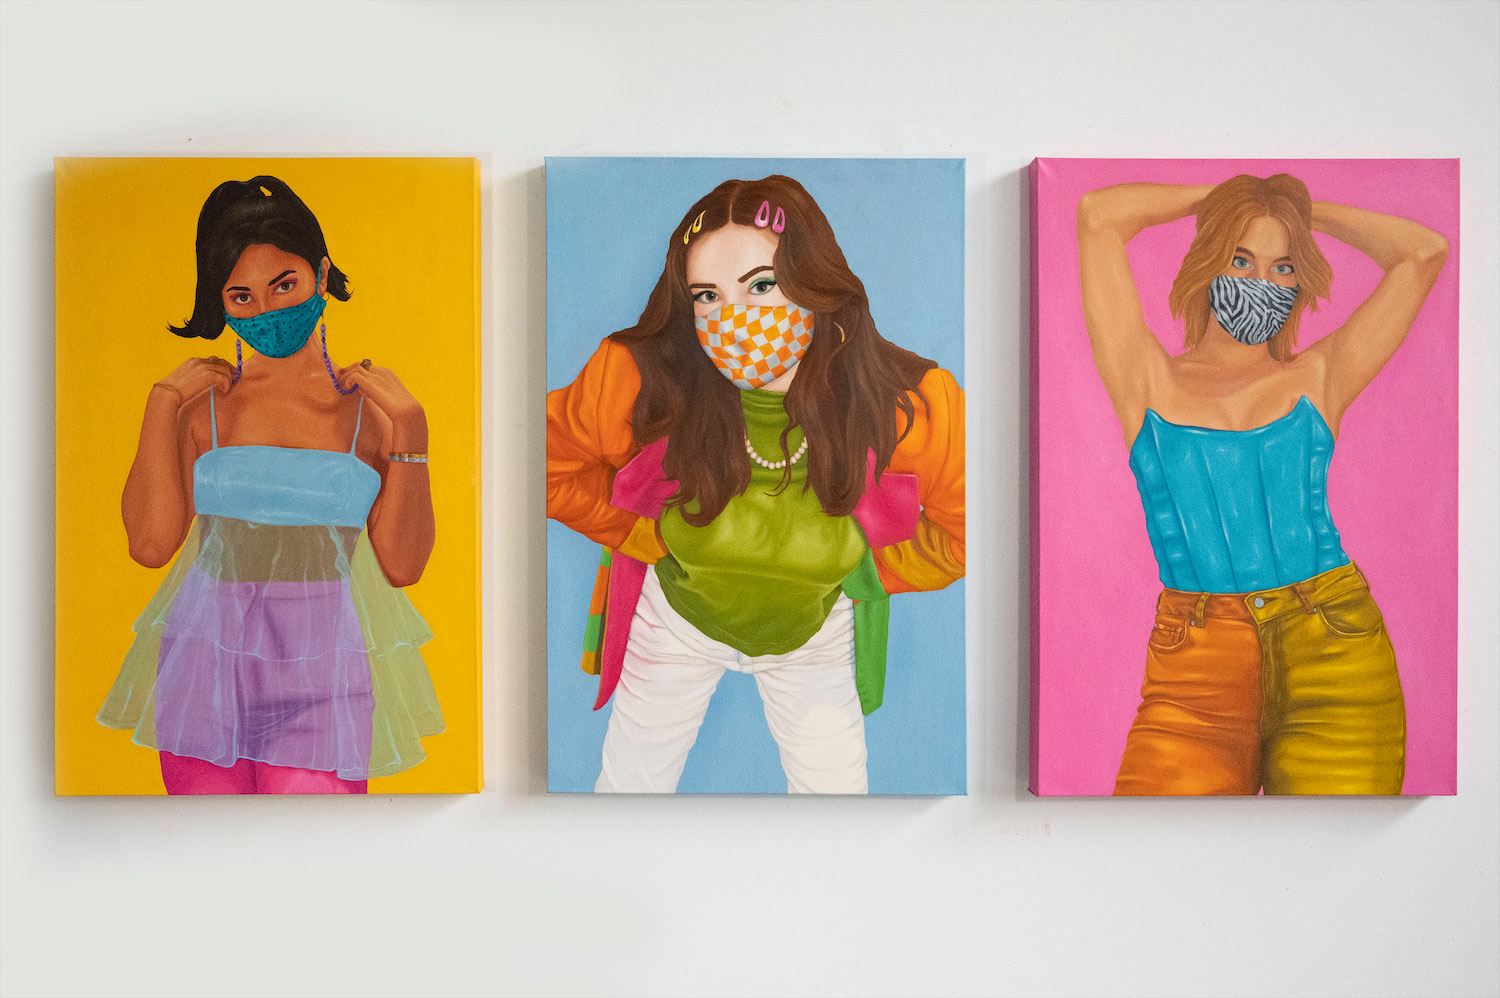 Installation view of triptych portraying three women in their quarantine best.